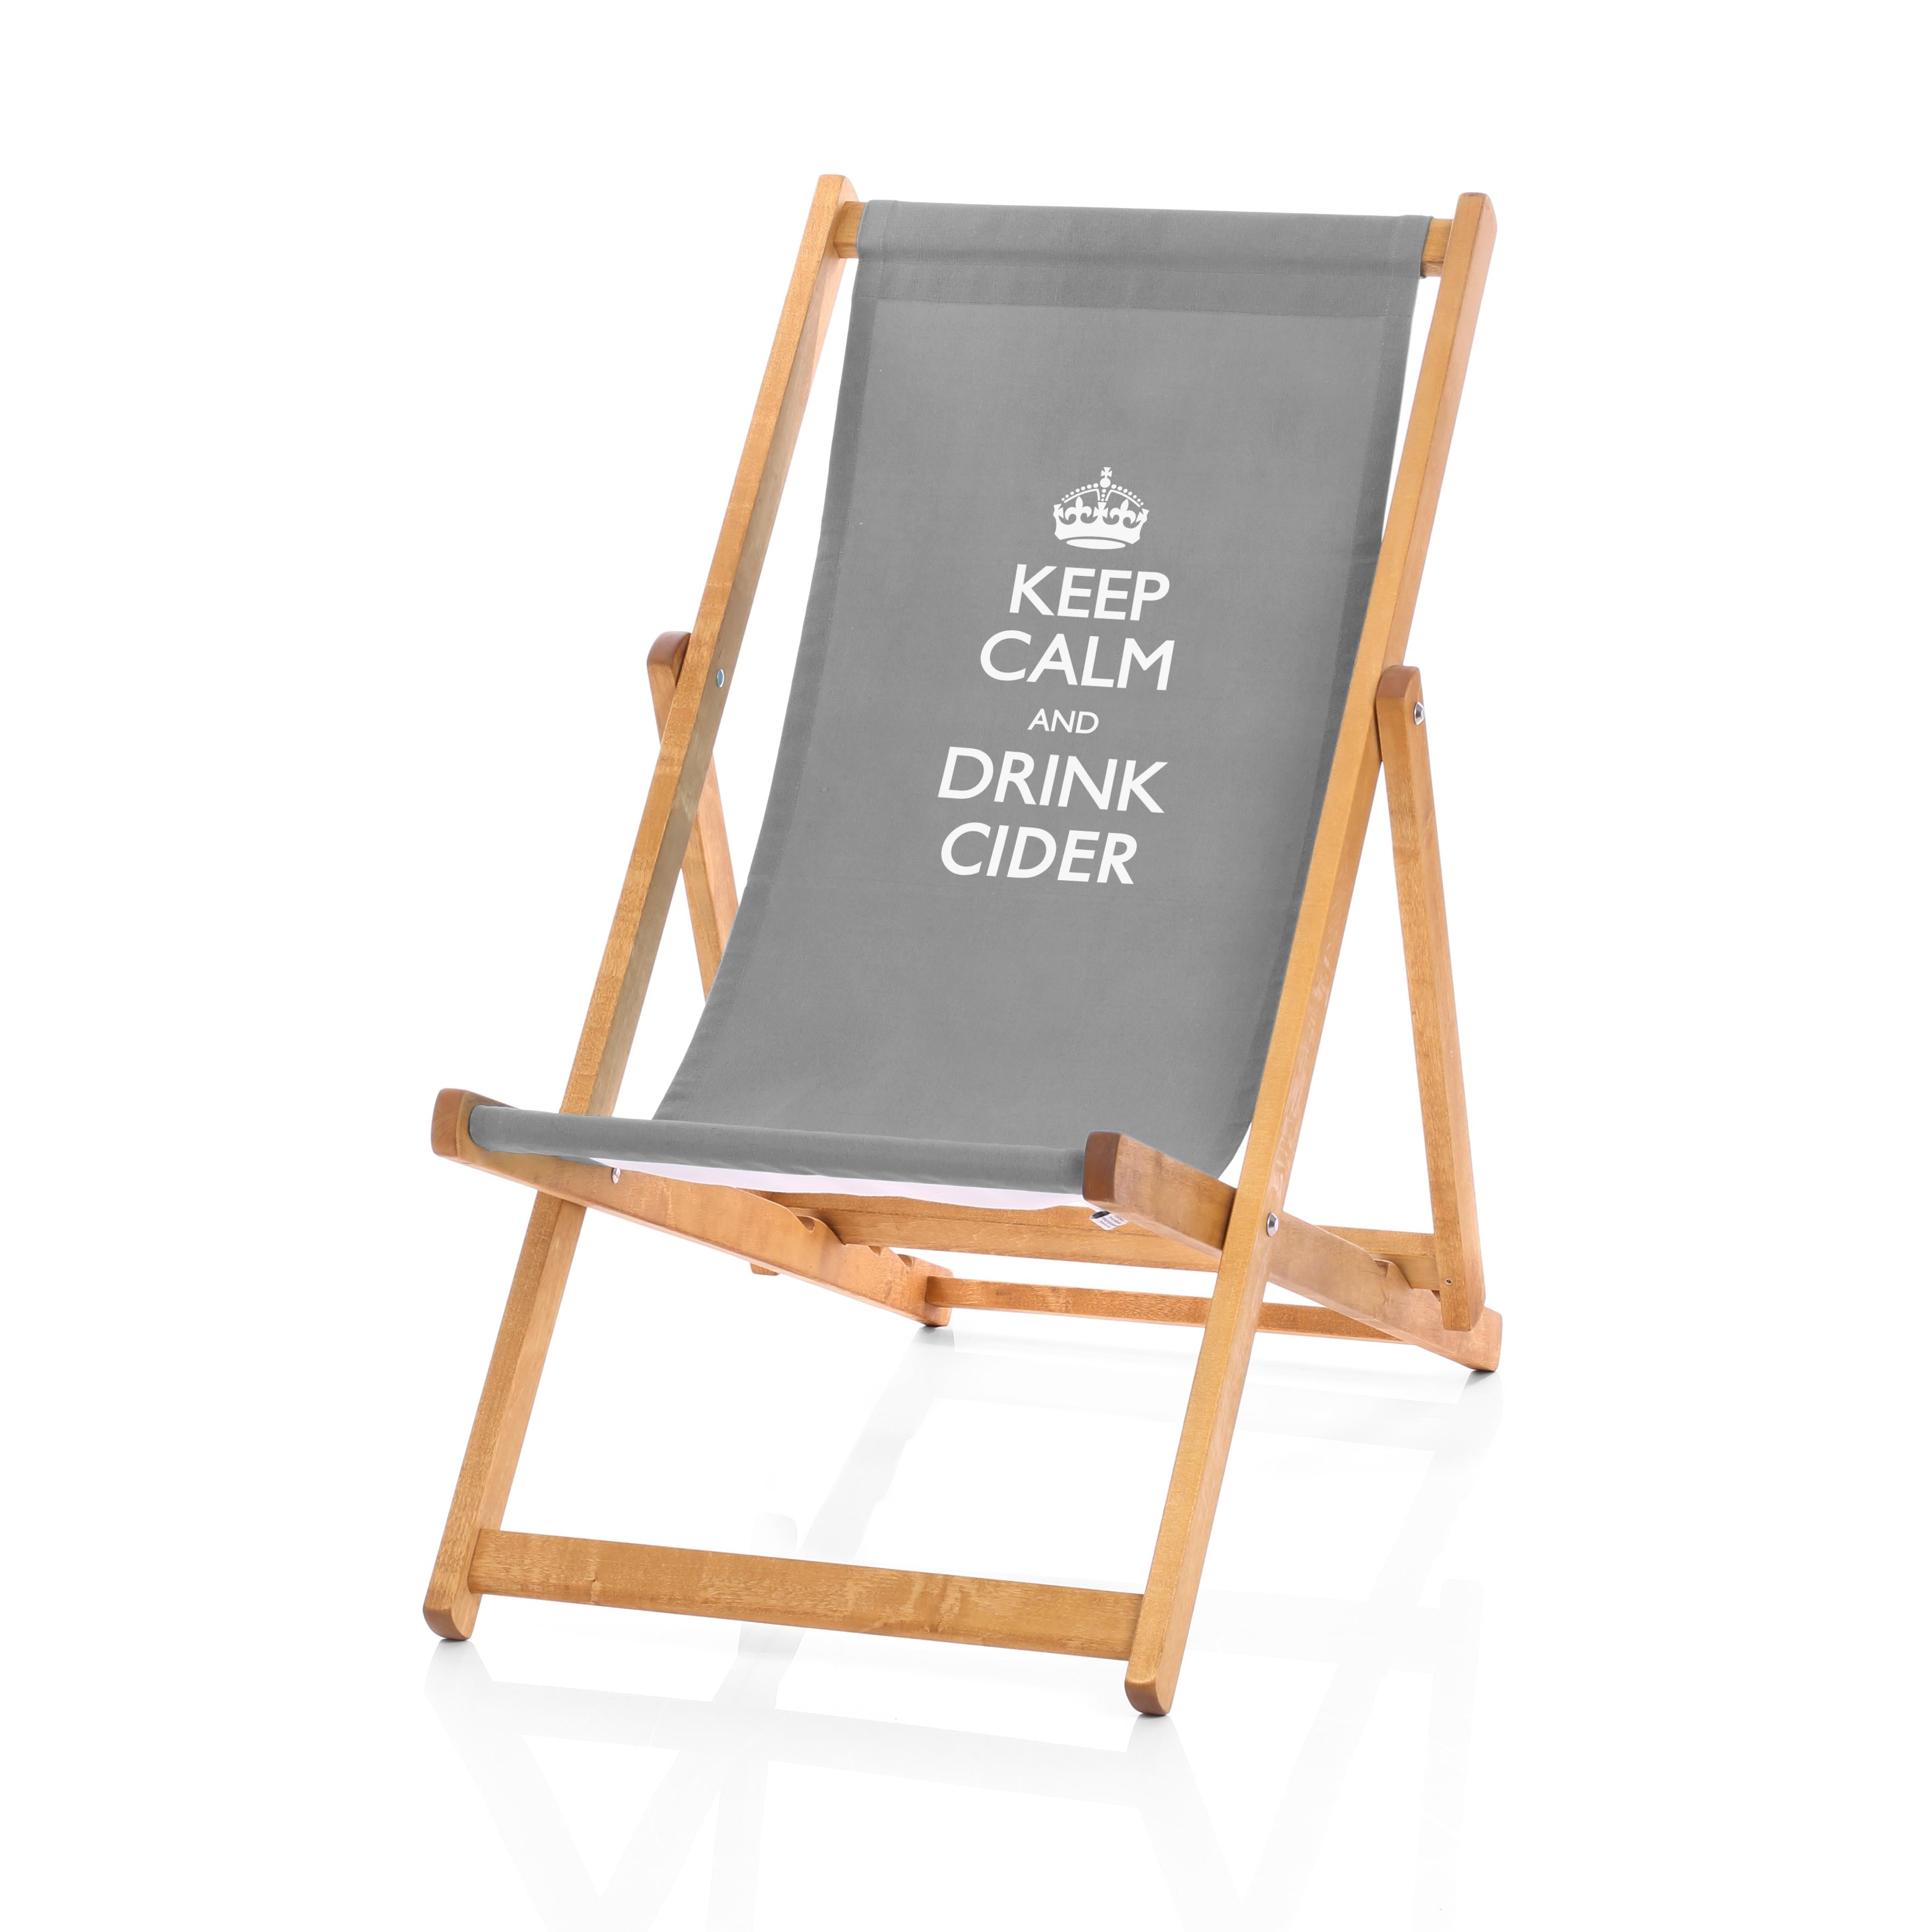 Hardwood Deckchairs - Keep Calm and Drink Cider